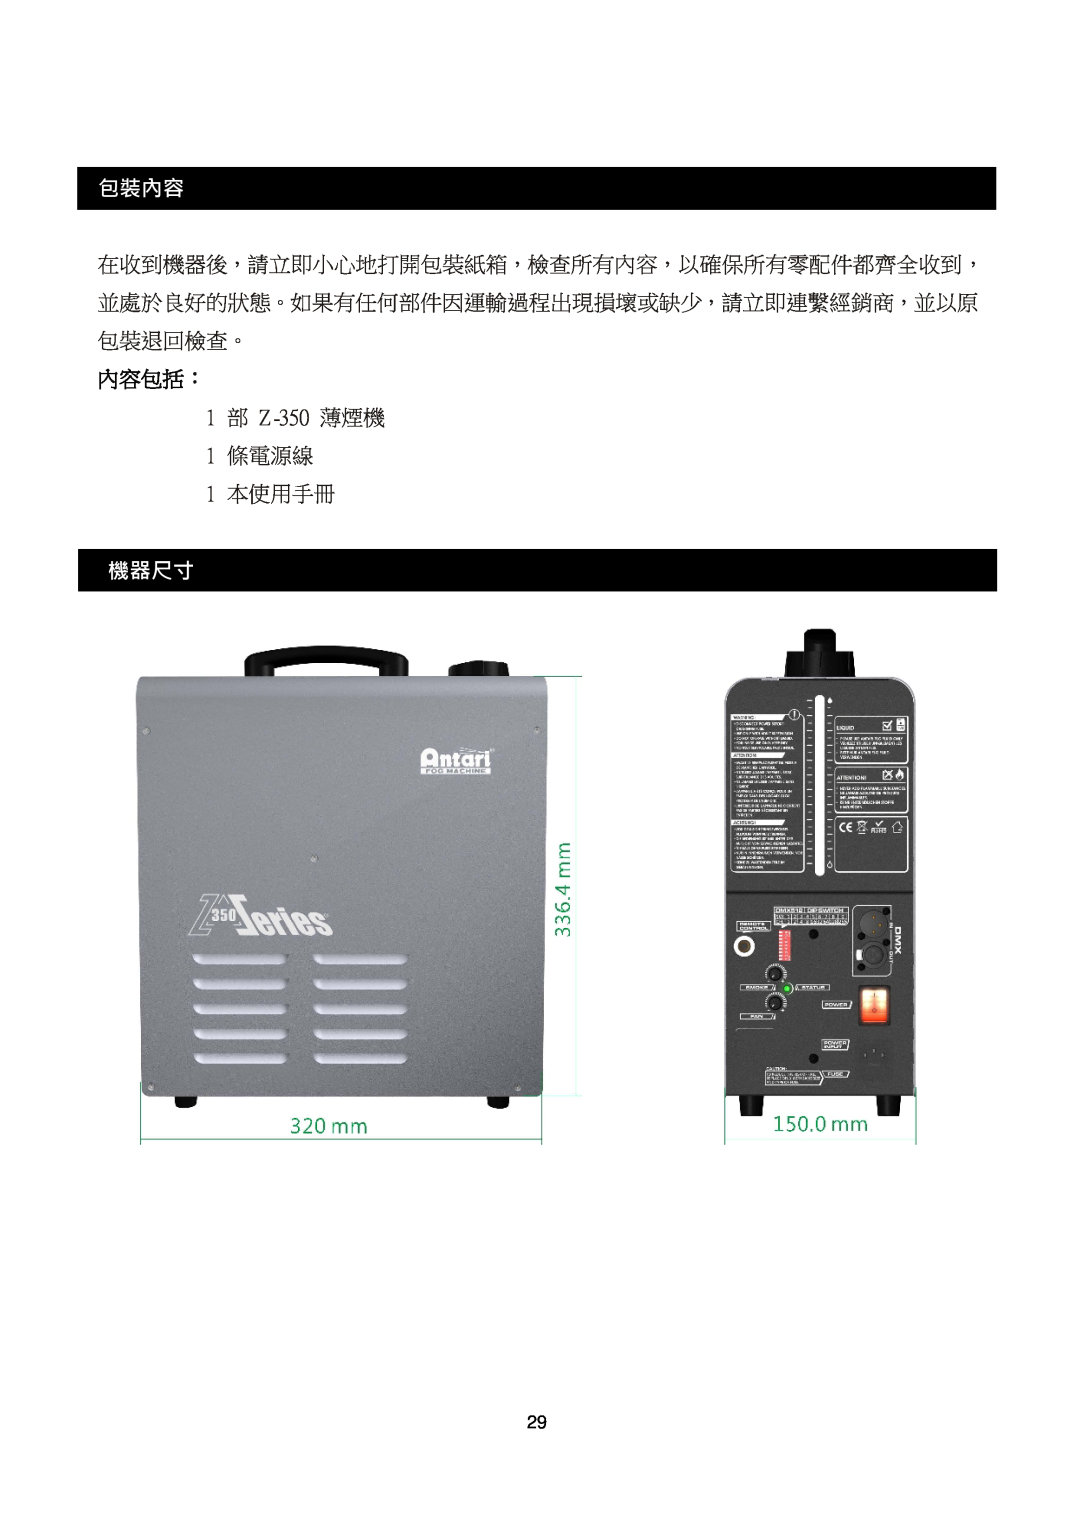 Antari Lighting and Effects user manual 包裝內容, 內容包括：, 1部 Z-350薄煙機 1條電源線 1本使用手冊, 機器尺寸 